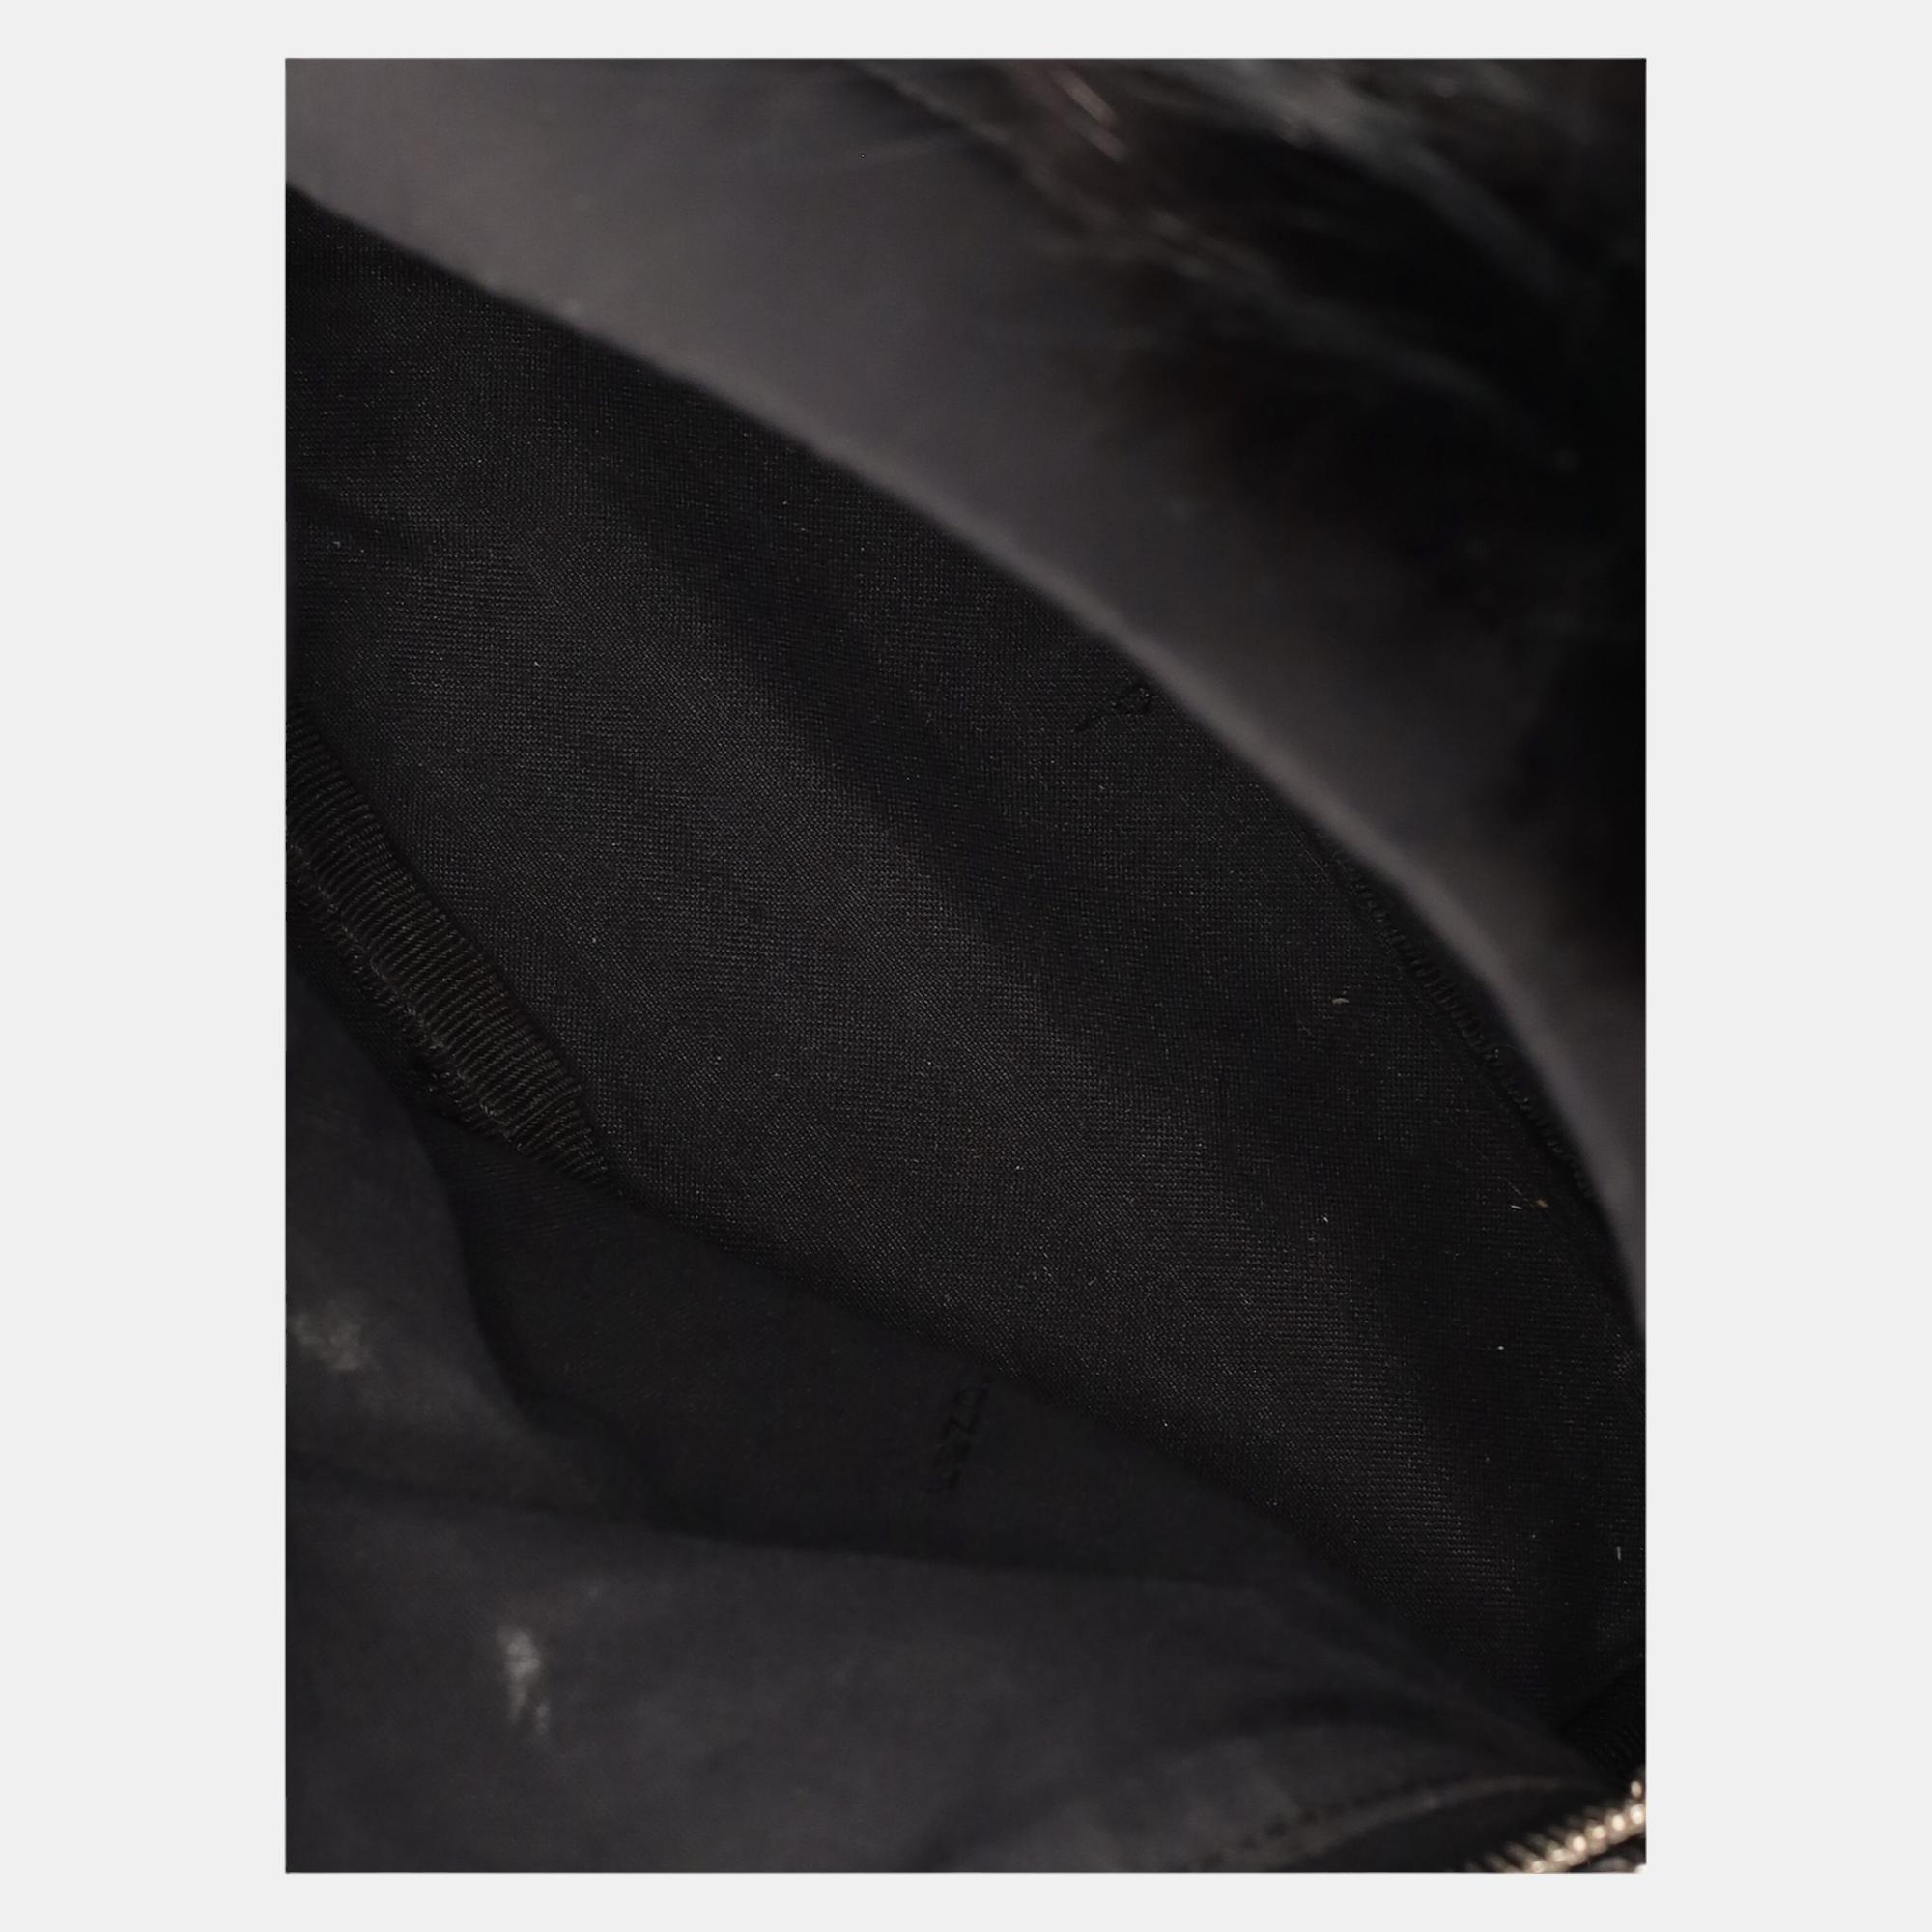 Fendi  Women's Synthetic Fibers Backpack - Black - One Size